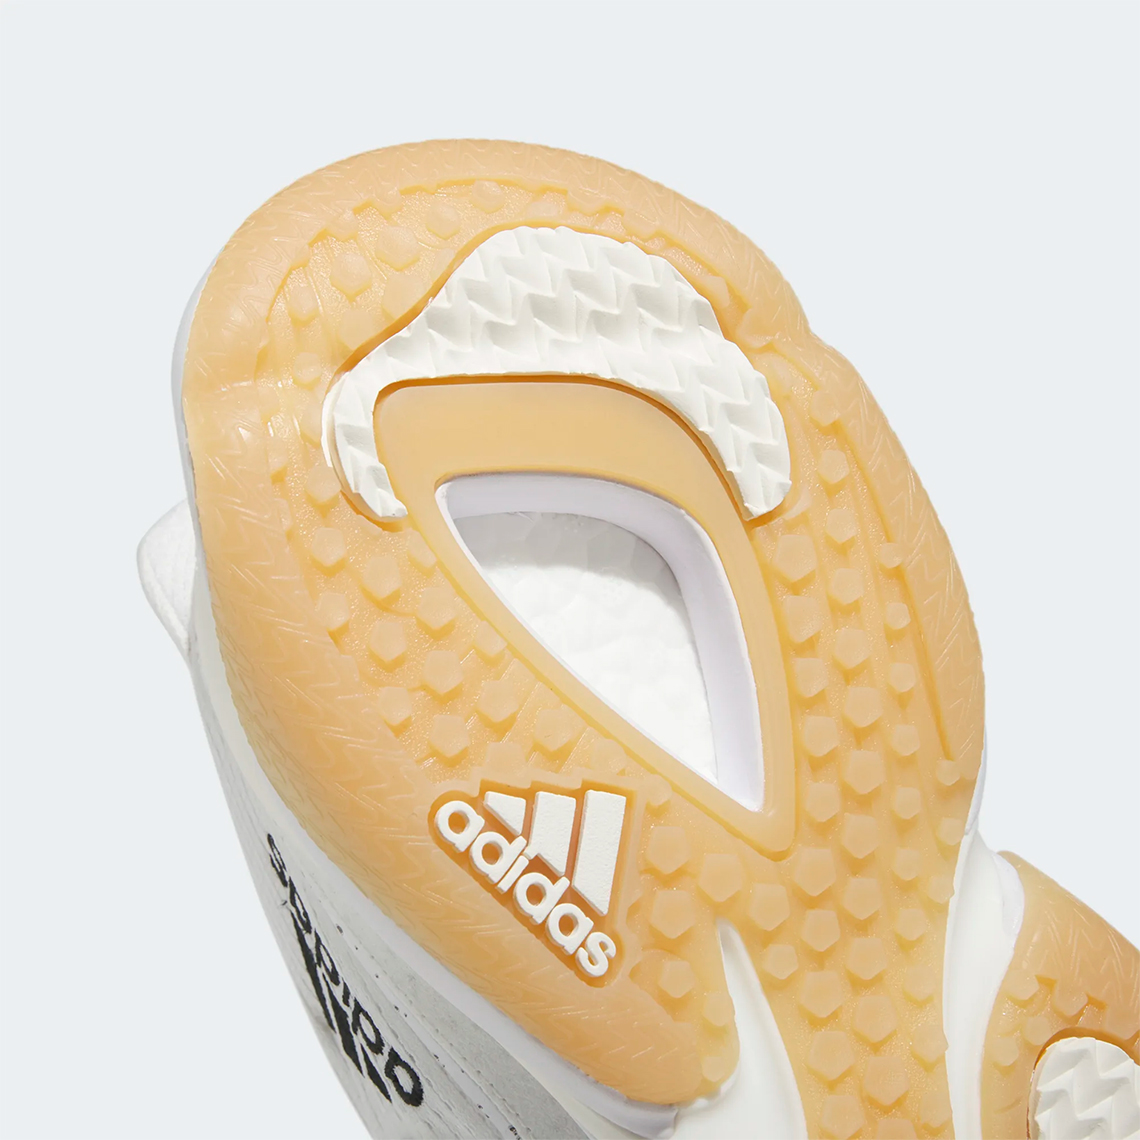 Pat Mahomes Adidas Impact Flx Off White Gum If4799 5